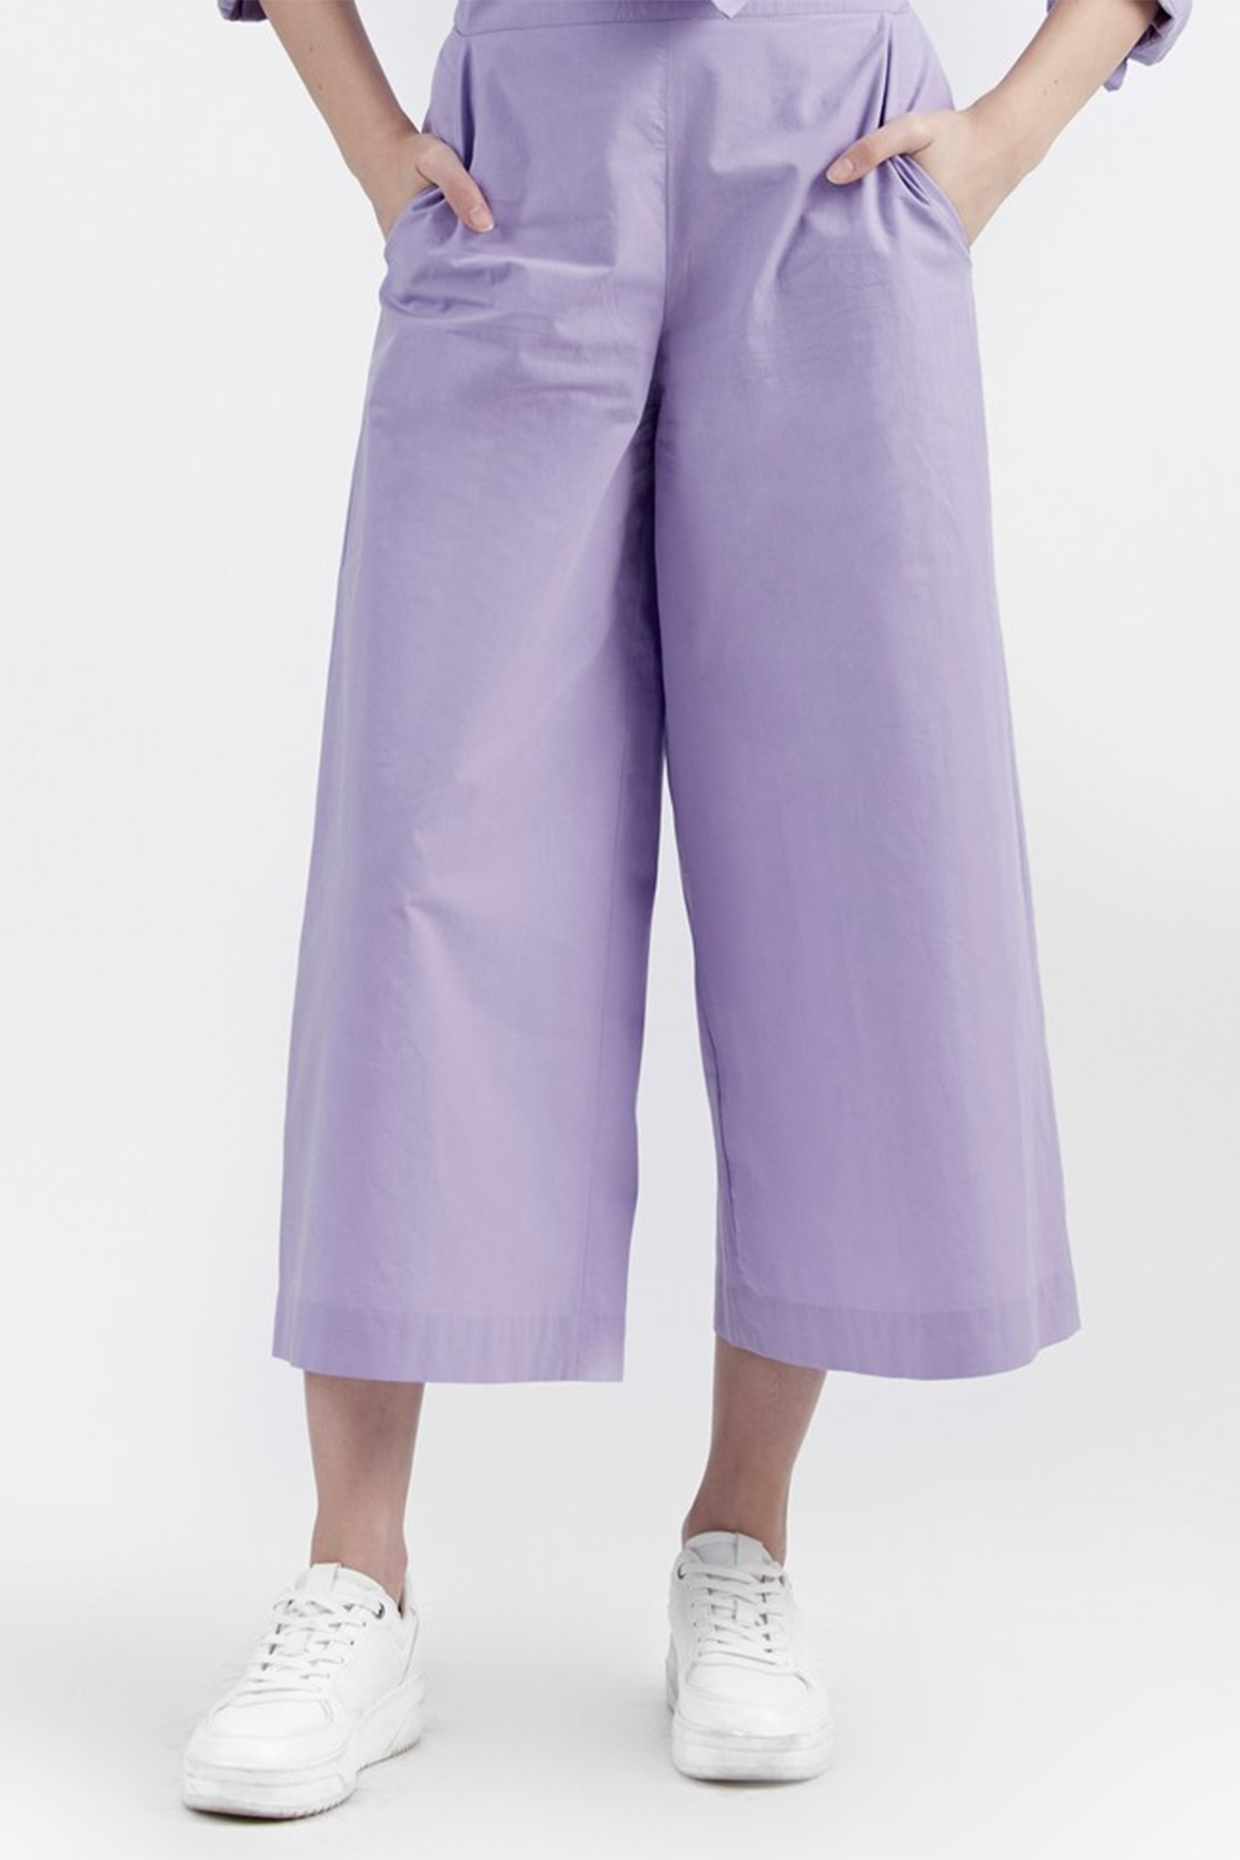 Buy Linen Culotte Pants SIENNA, Linen Pants With Elastic Waistband, Linen  Pants for Woman, Linen Pants, Linen Wide Leg Pants Online in India - Etsy